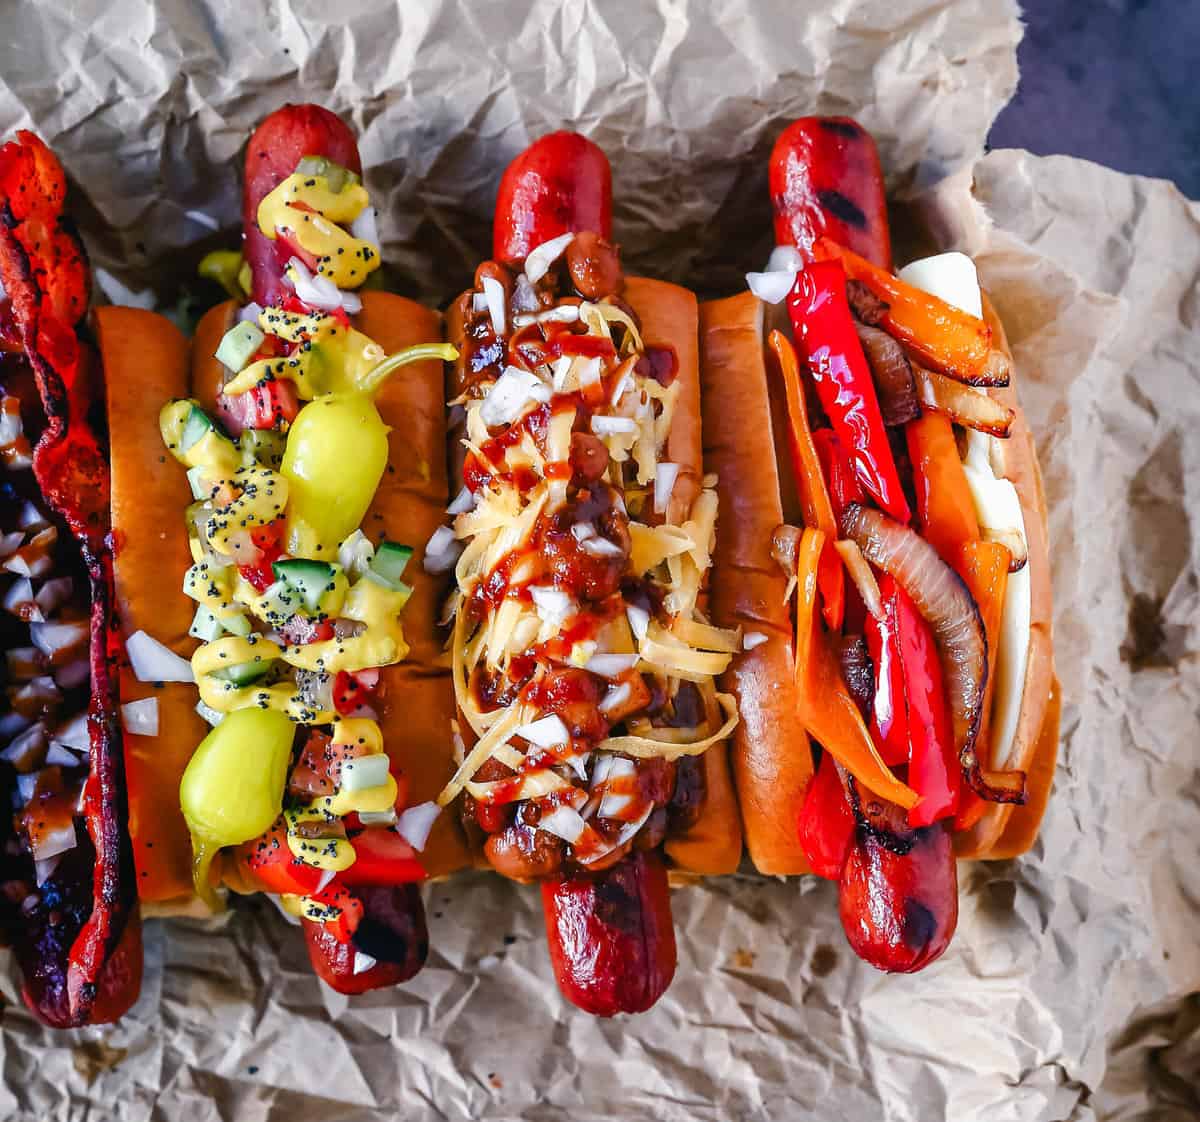 Hot Dog του Σικάγο.  Καλύμματα σκύλων Σικάγο.  Πώς να δημιουργήσετε το απόλυτο Gourmet Hot Dogs με όλα τα νόστιμα toppings για hot dog.  Μπορείτε να δημιουργήσετε διάσημα χοτ ντογκ όπως τα Σικάγο Dogs, τα Chili Dogs, ακόμα και τα BBQ Bacon Dogs.  Συμβουλές για το πώς να μετατρέψετε ένα συνηθισμένο χοτ ντογκ στο πιο γευστικό χοτ ντογκ που θα φάτε ποτέ!